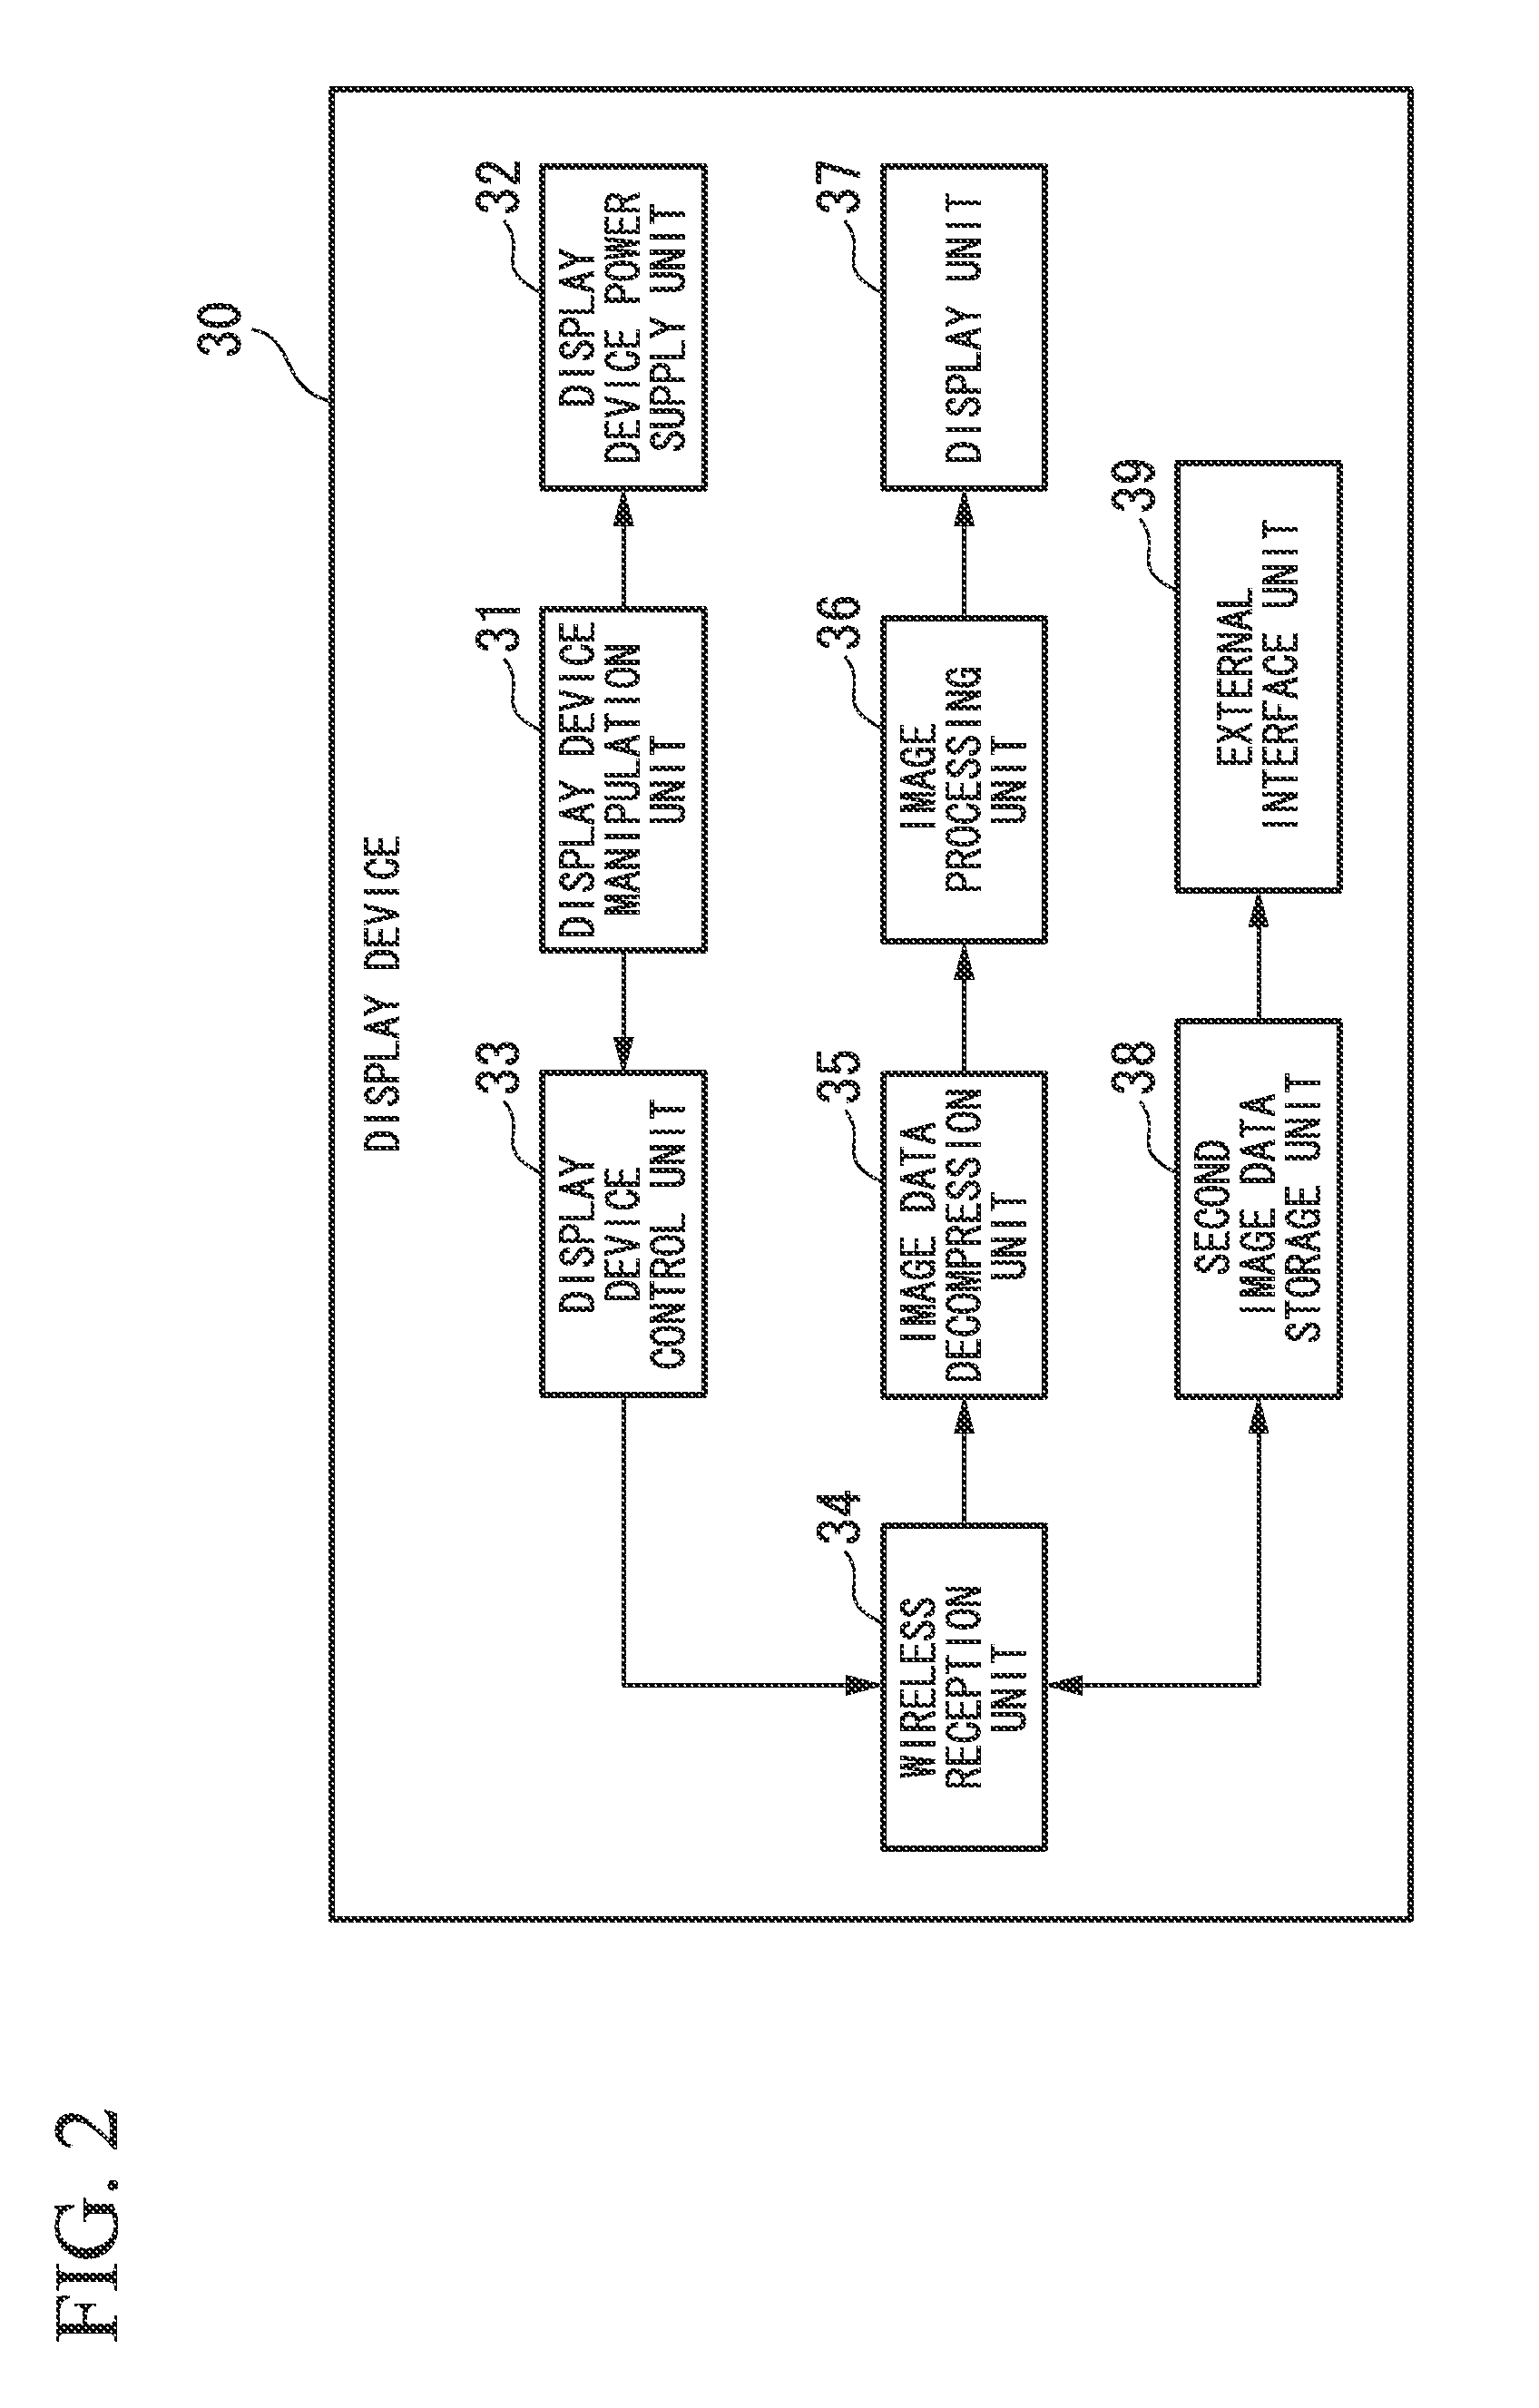 Image transmission apparatus and image reception apparatus